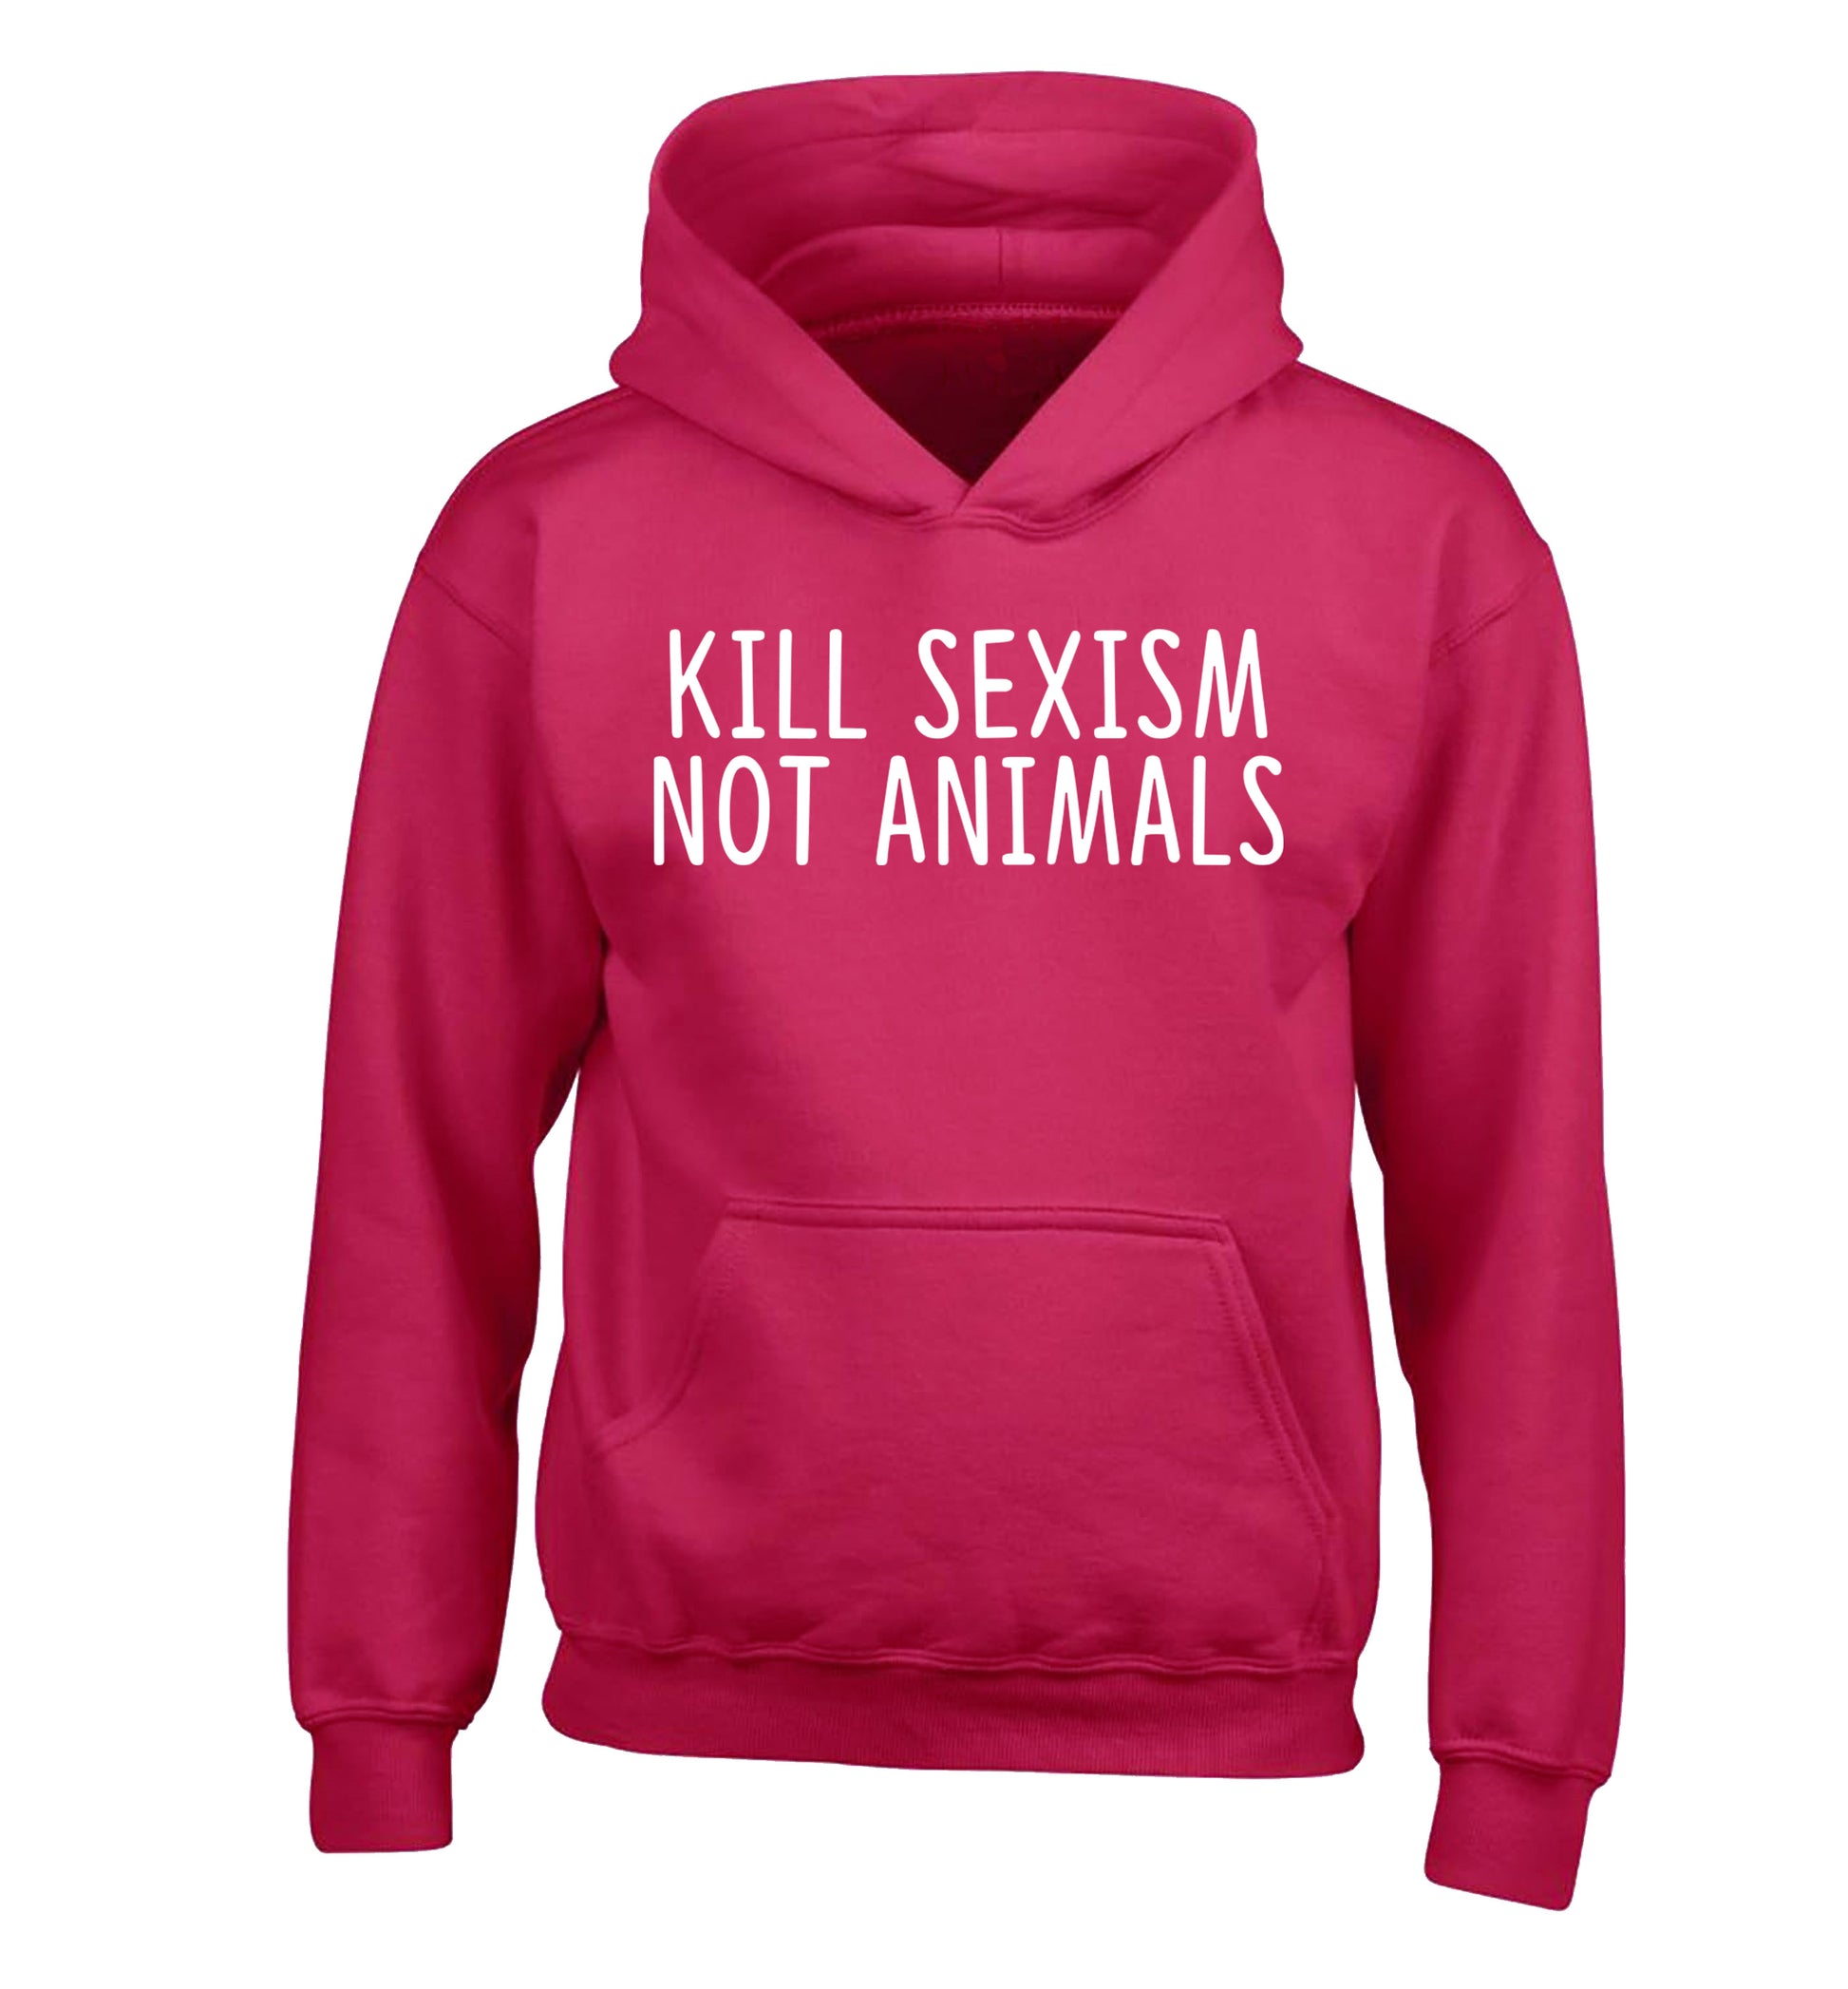 Kill Sexism Not Animals children's pink hoodie 12-13 Years